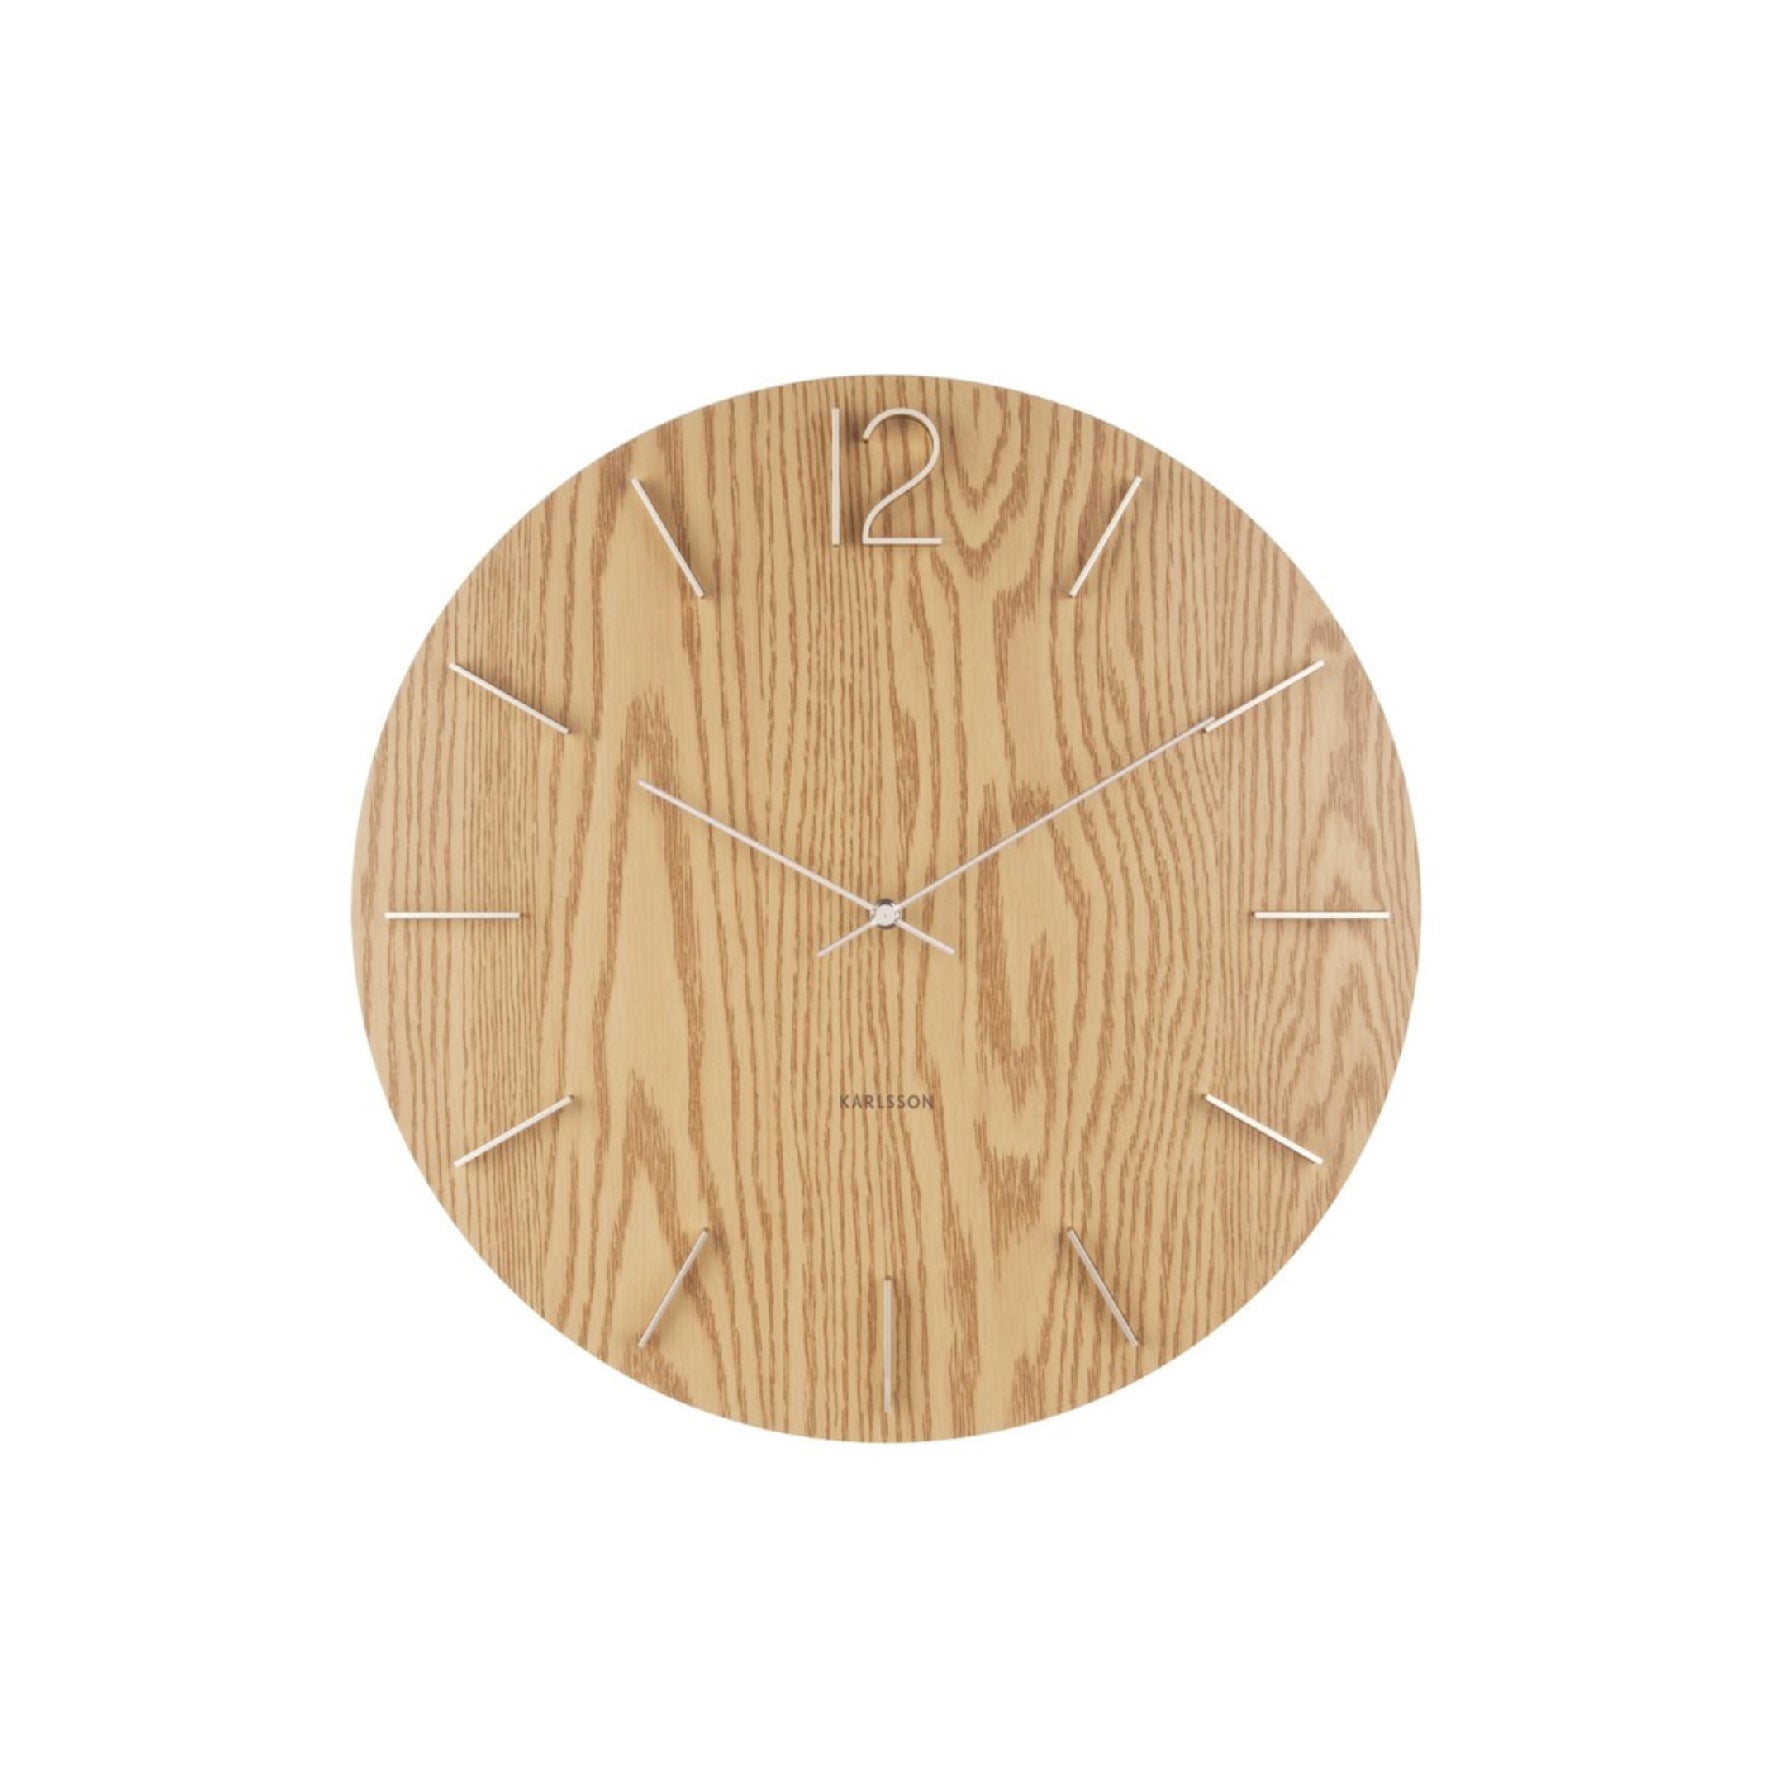 Wall Clock Meek - Light Wood 淺木鋼材刻度掛鐘 Karlsson